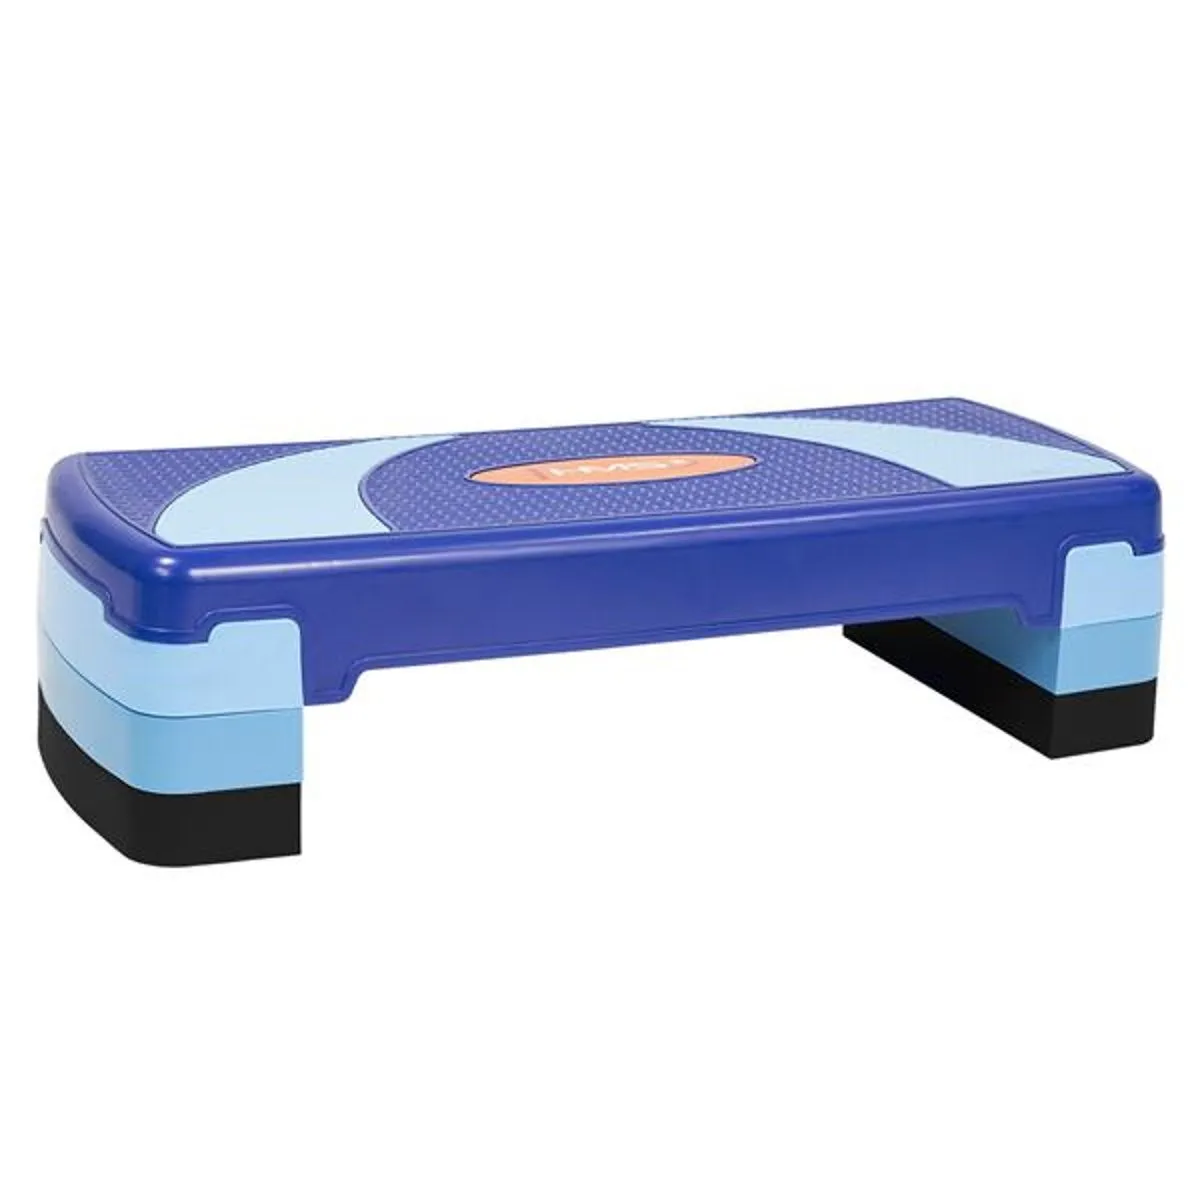 Aerobic stepper - Stepping board blue height adjustable 08-03111BL